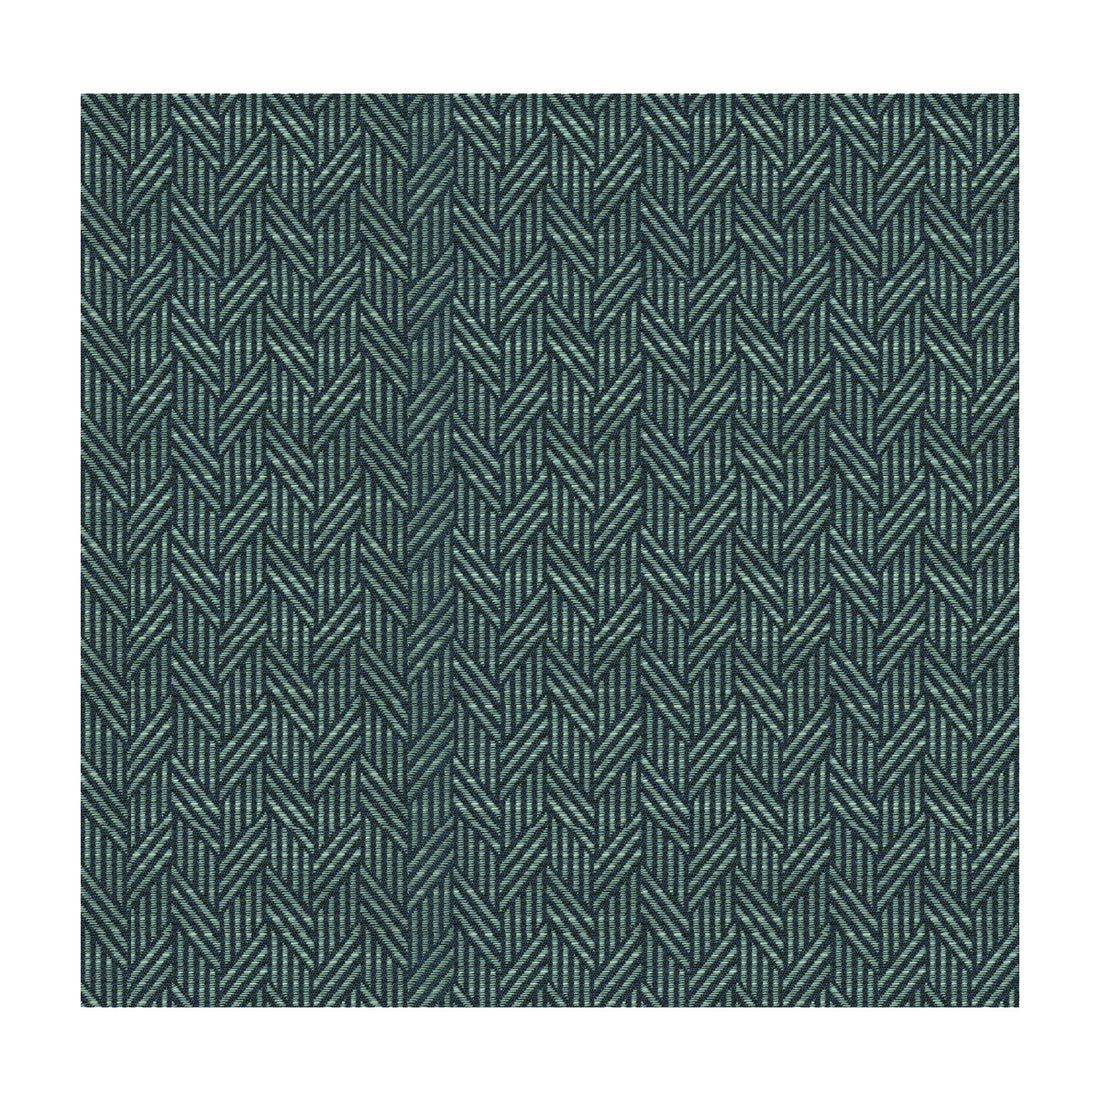 Kravet Smart fabric in 33618-5 color - pattern 33618.5.0 - by Kravet Smart